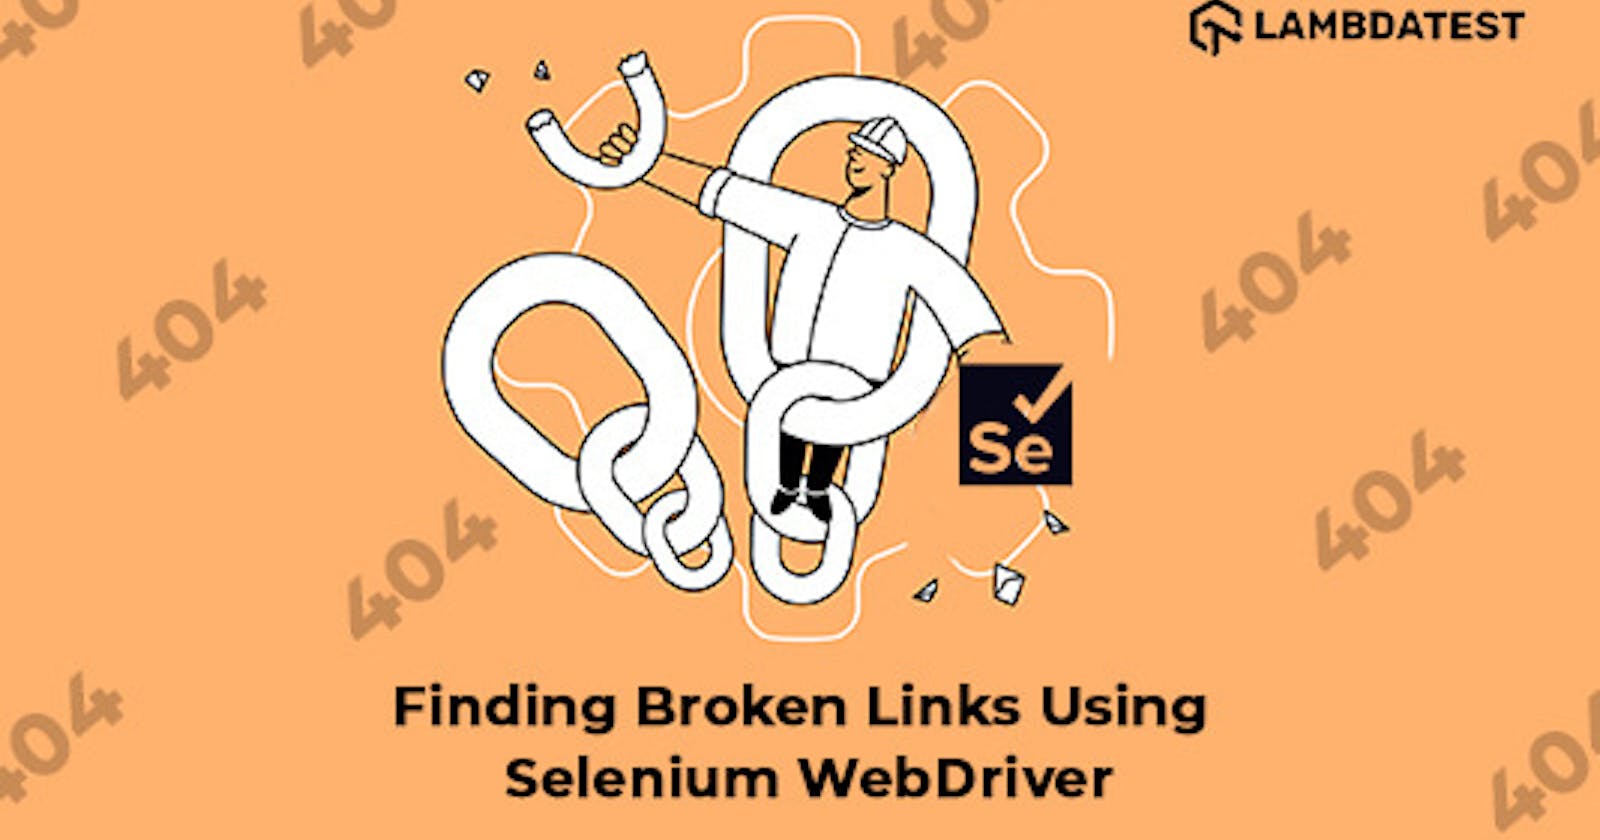 How To Find Broken Links Using Selenium WebDriver?